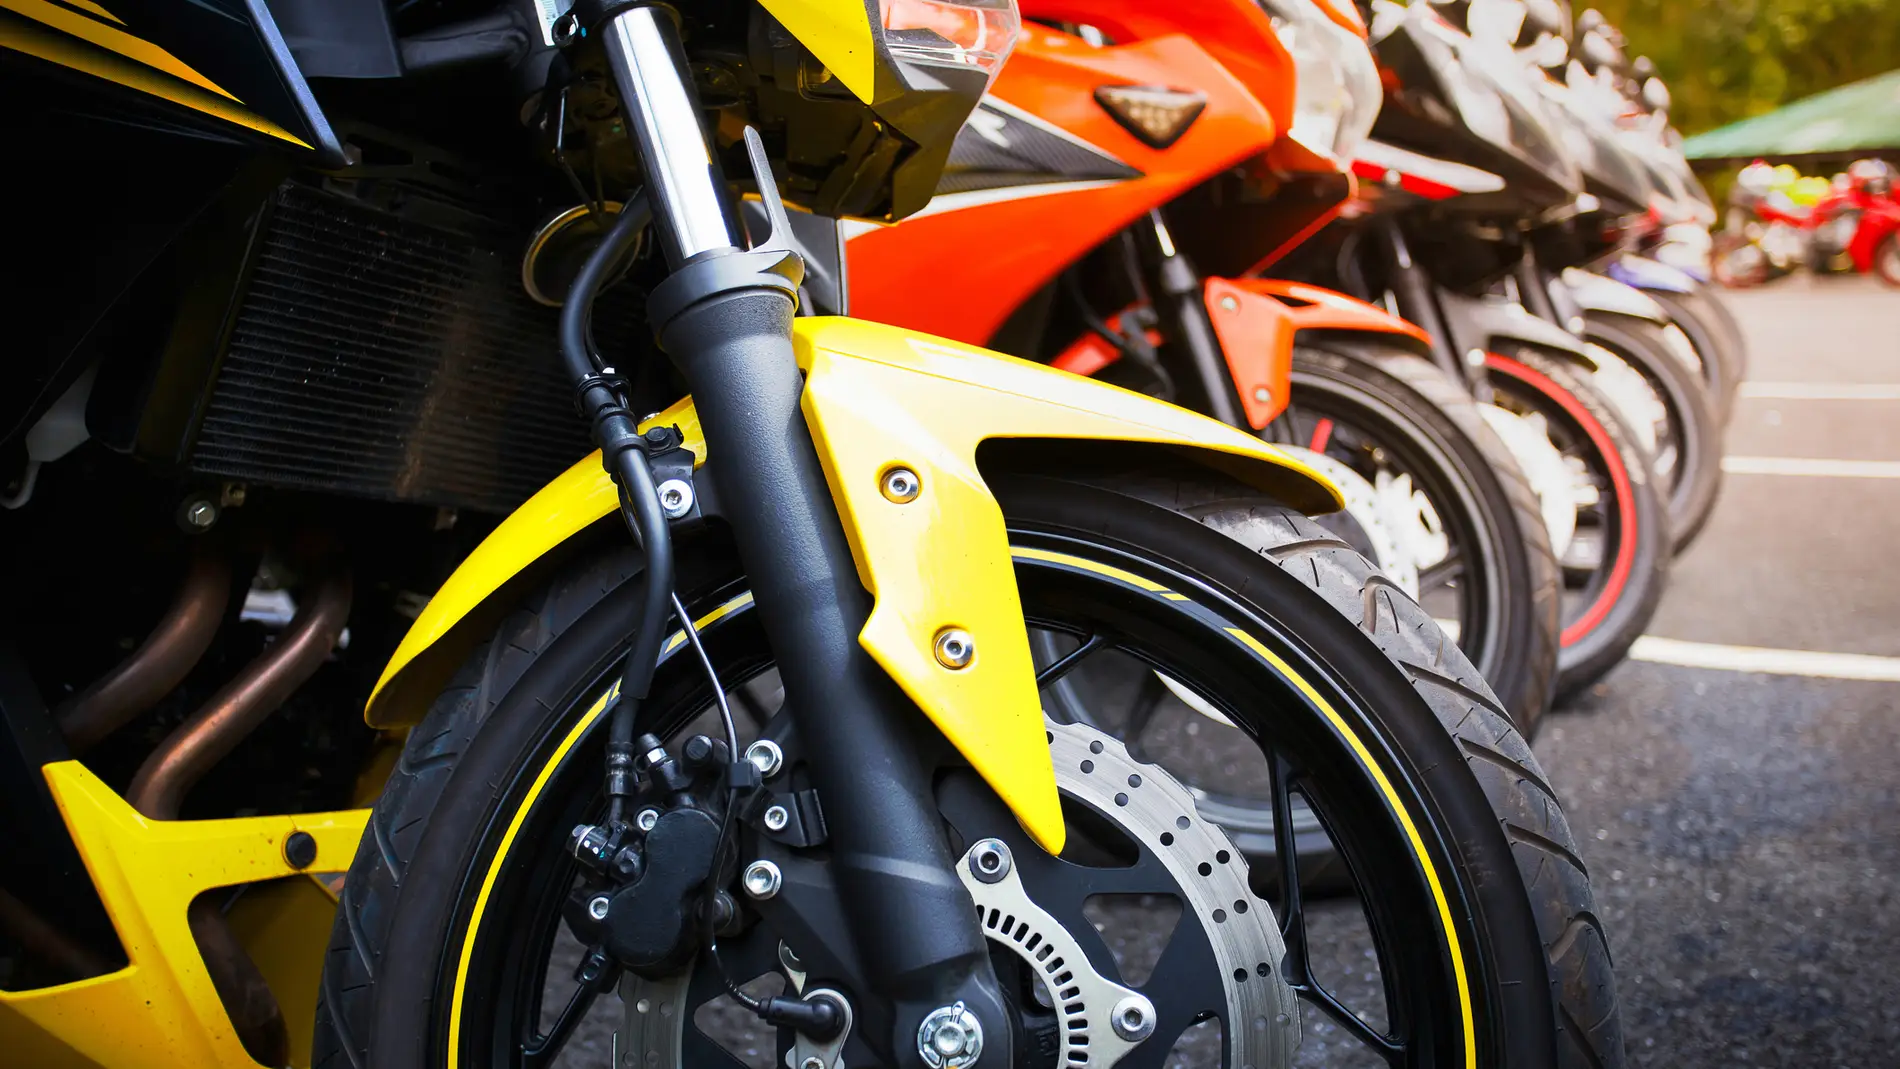 10 cascos de moto homologados por la DGT que son realmente baratos